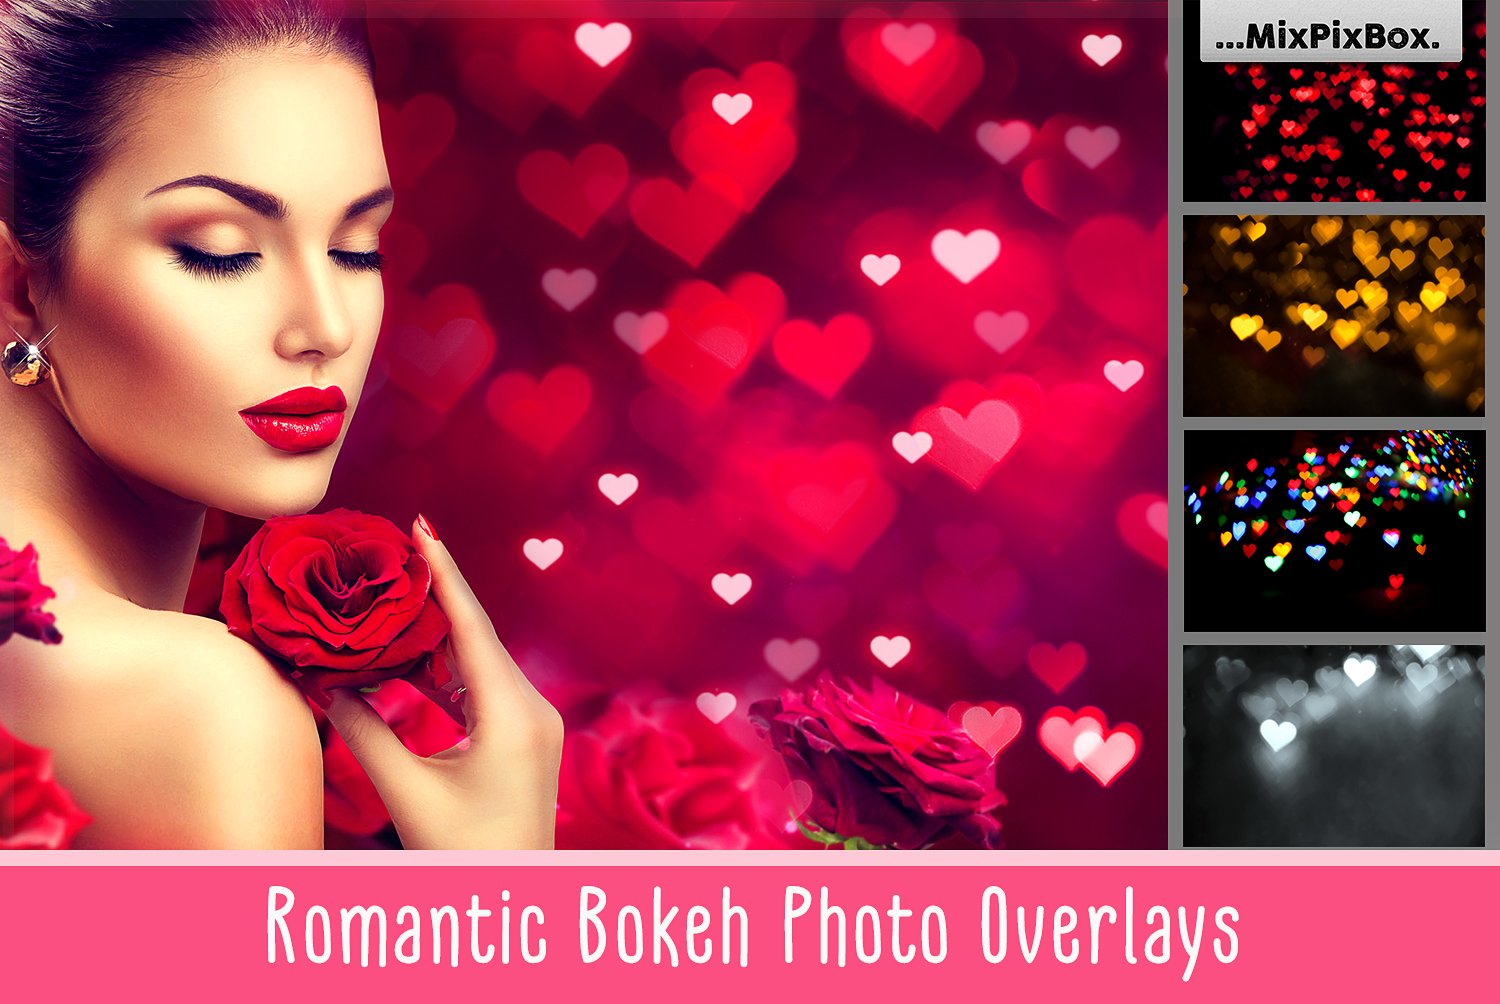 Romantic Bokeh Photo Overlayscover image.